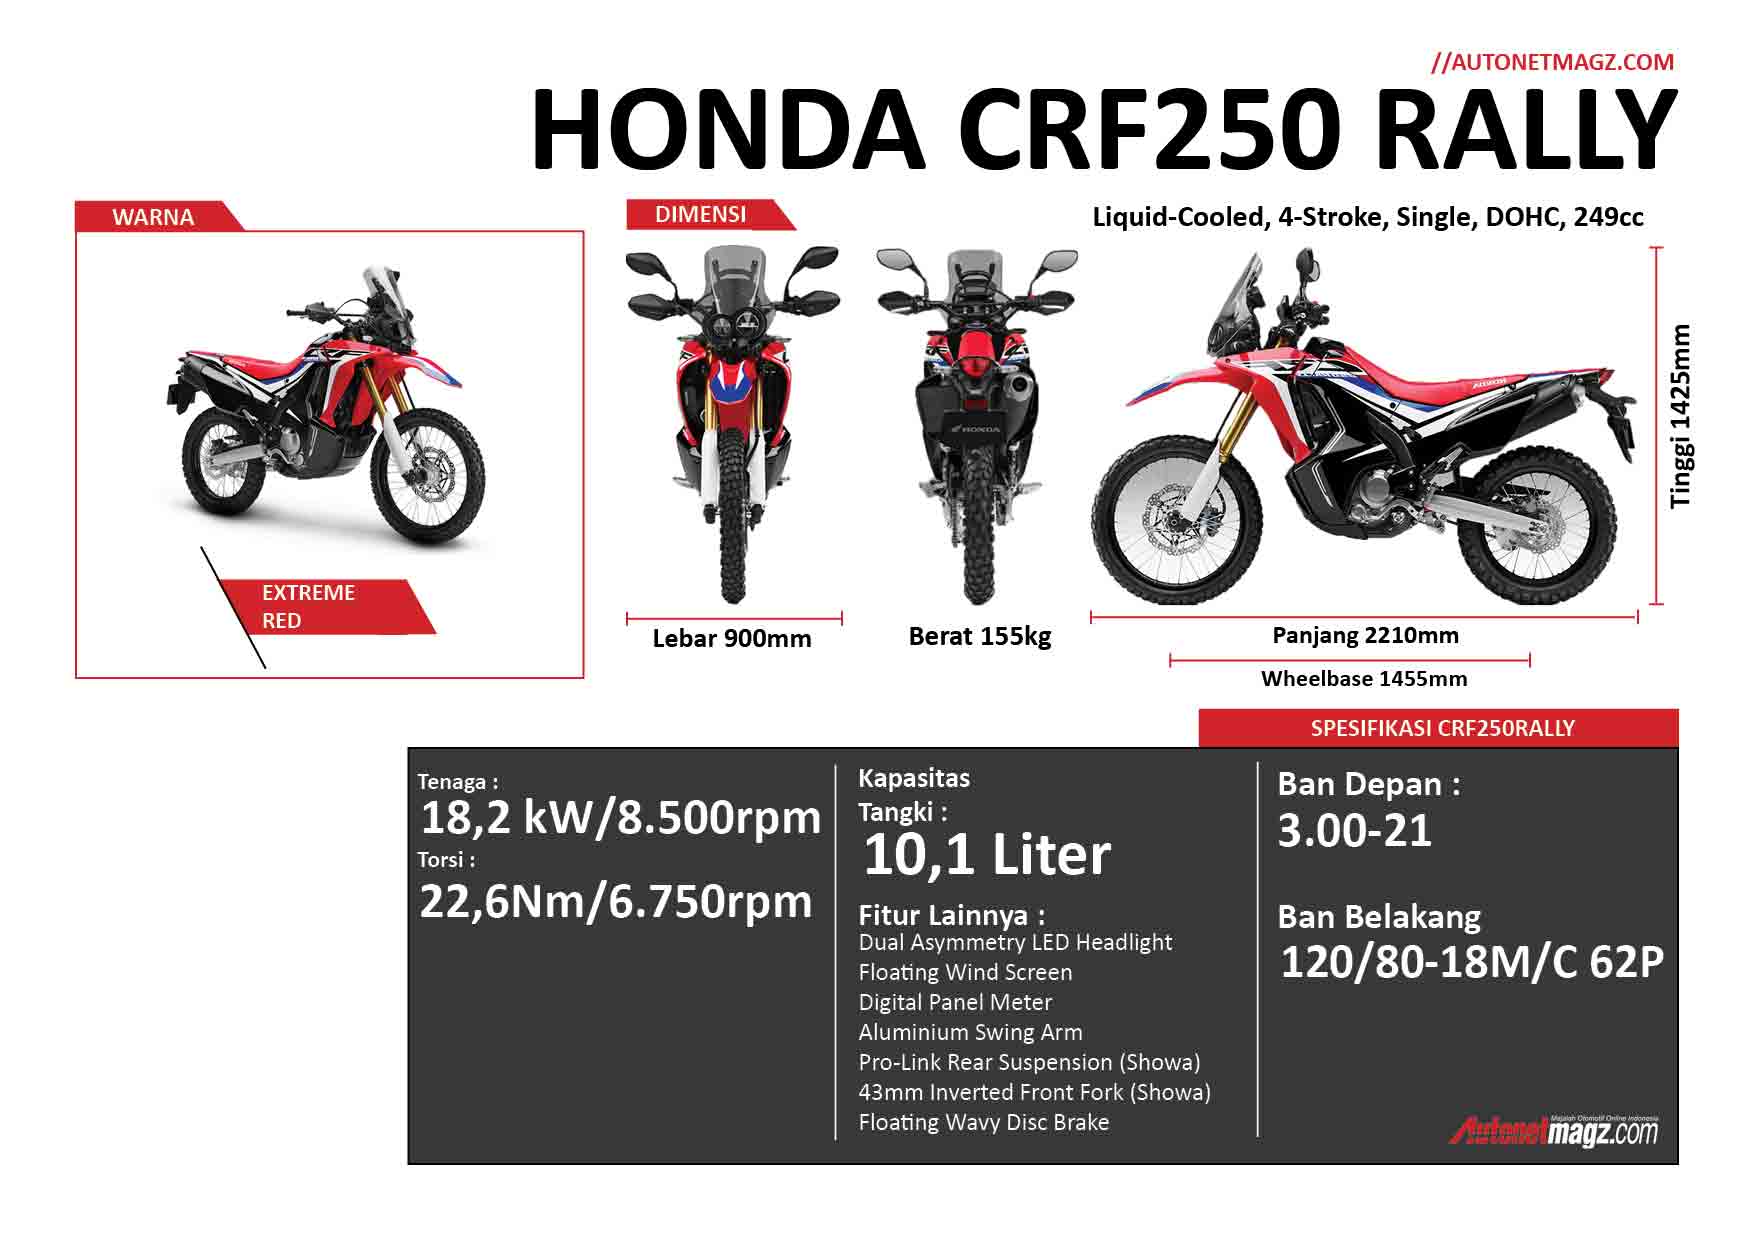 Honda высота по седлу. Honda CRF 250 Rally характеристики. Honda Rally 250 схема. Honda CRF 250 высота по седлу. Размеры Хонда ЦРФ 250.